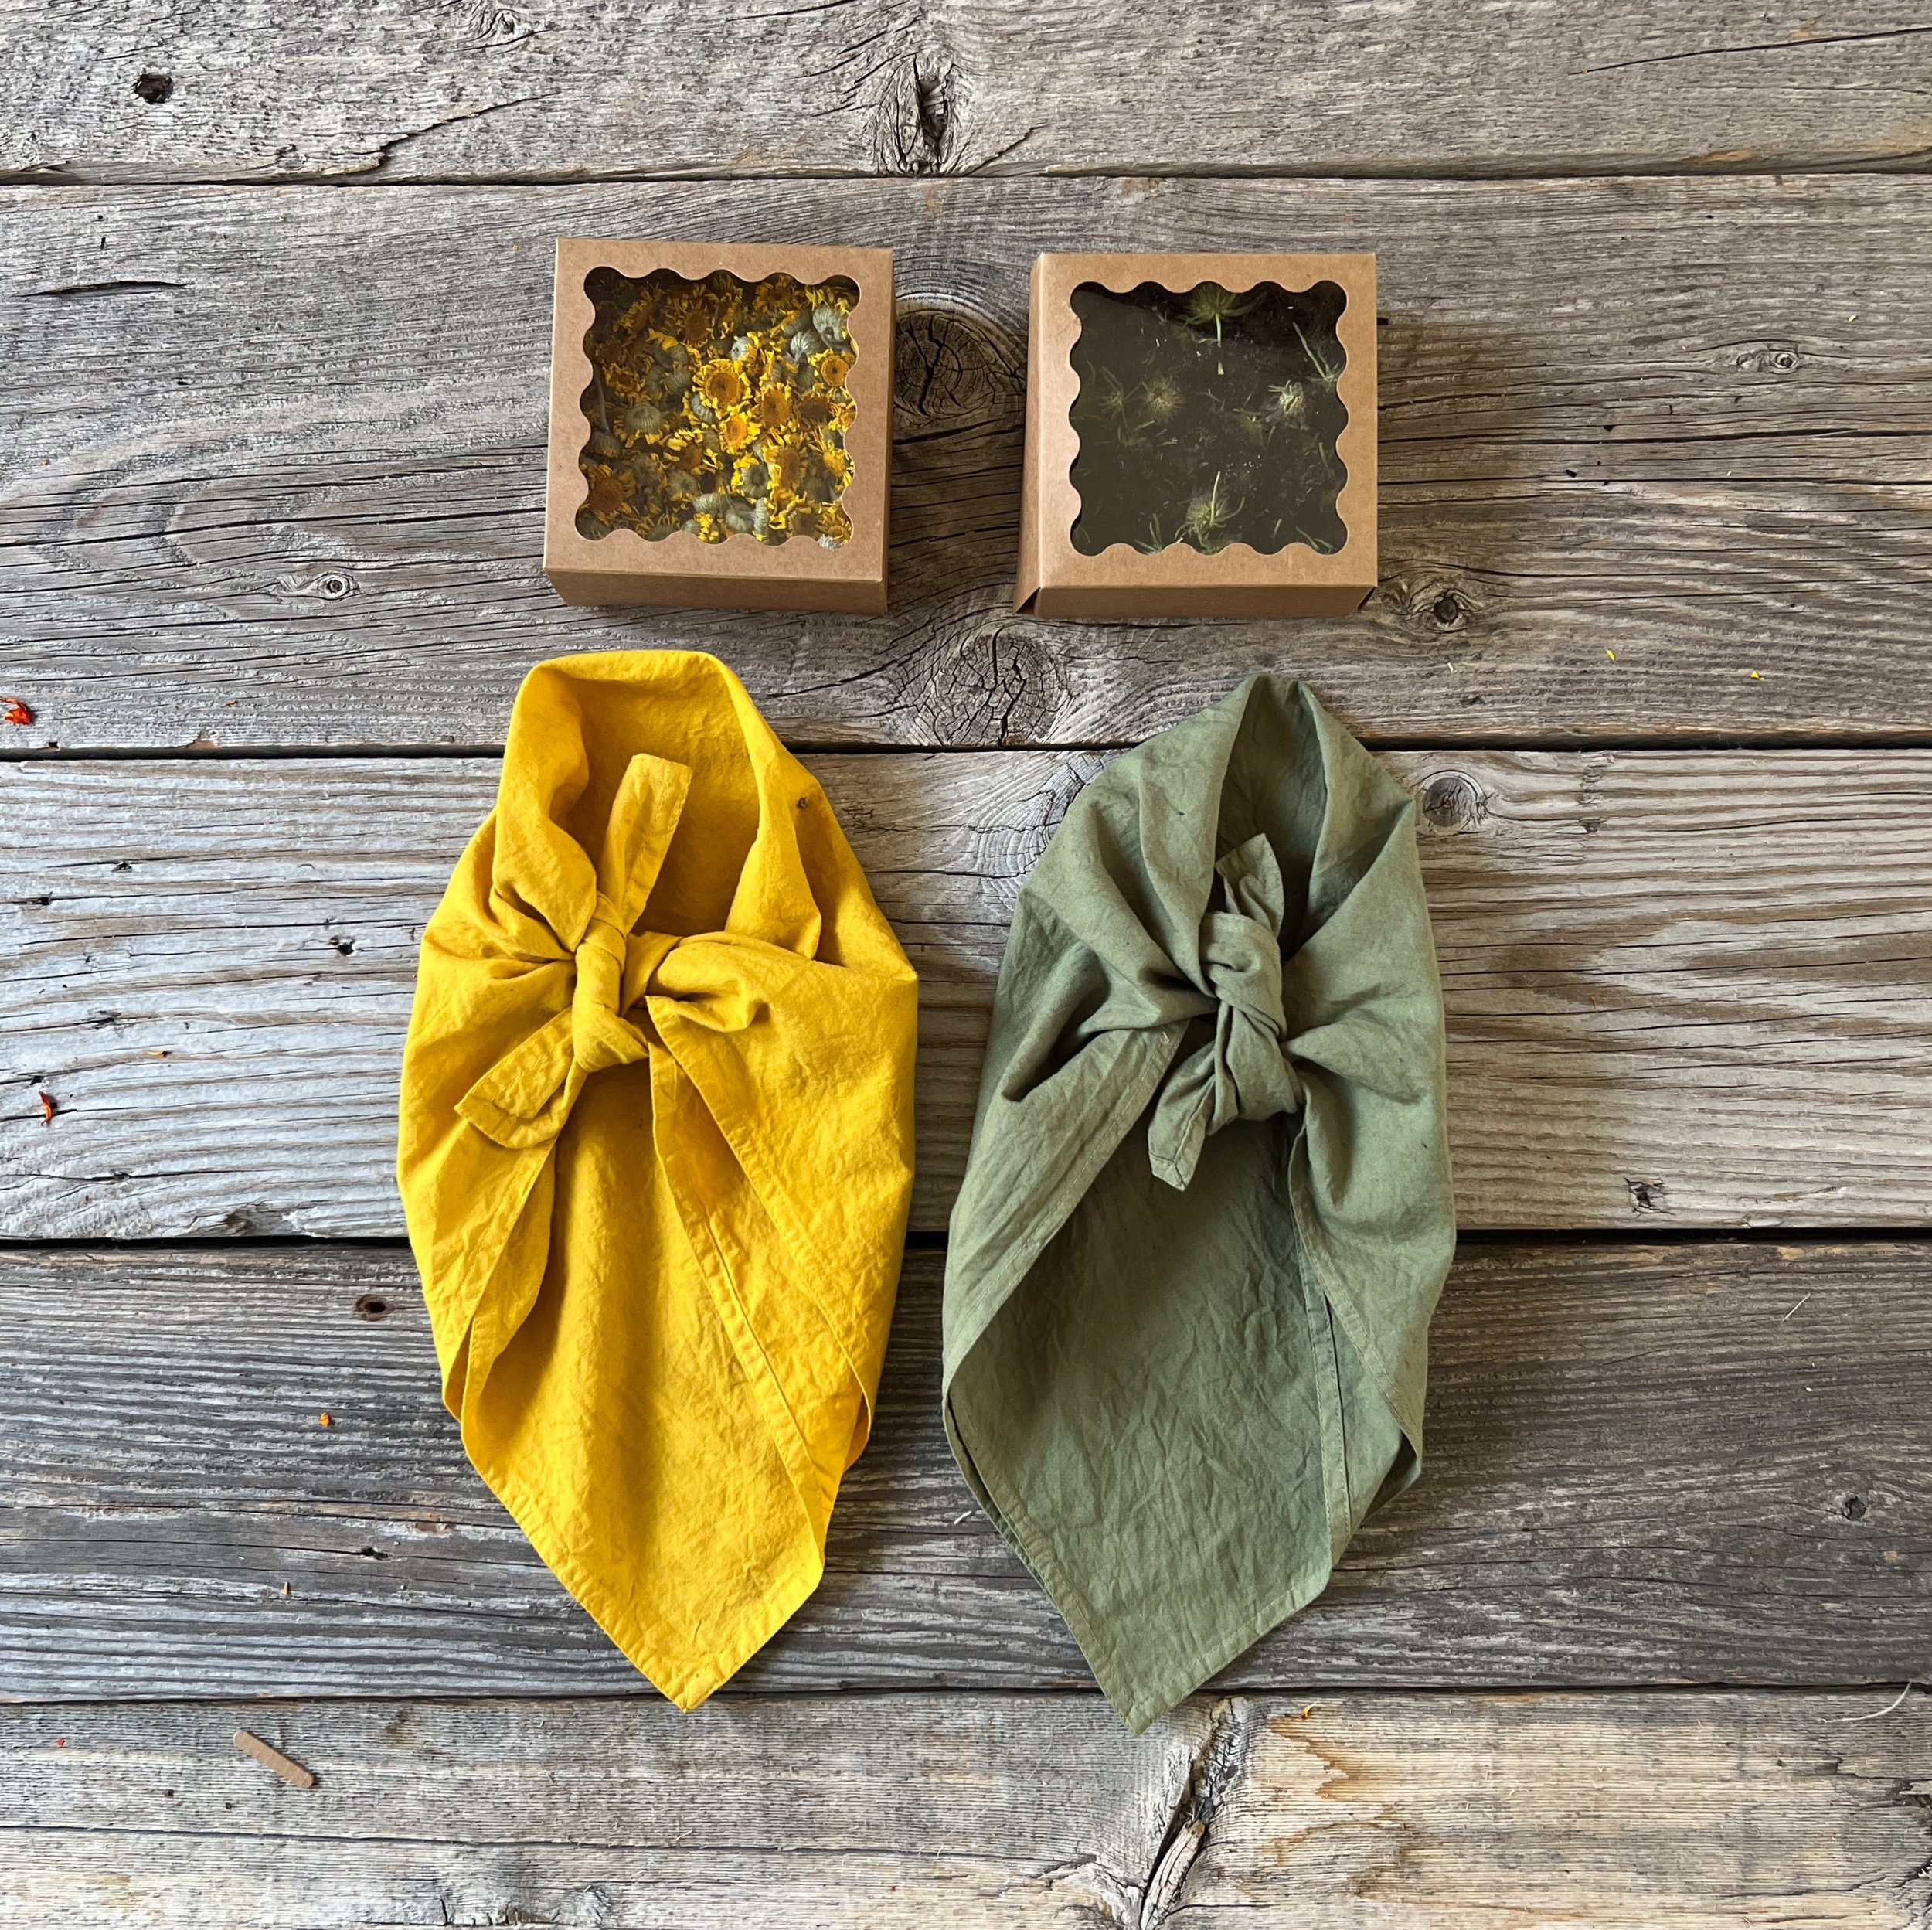 Natural Dye Series Post 3: Dyeing Fabric Yardage — Farm & Folk